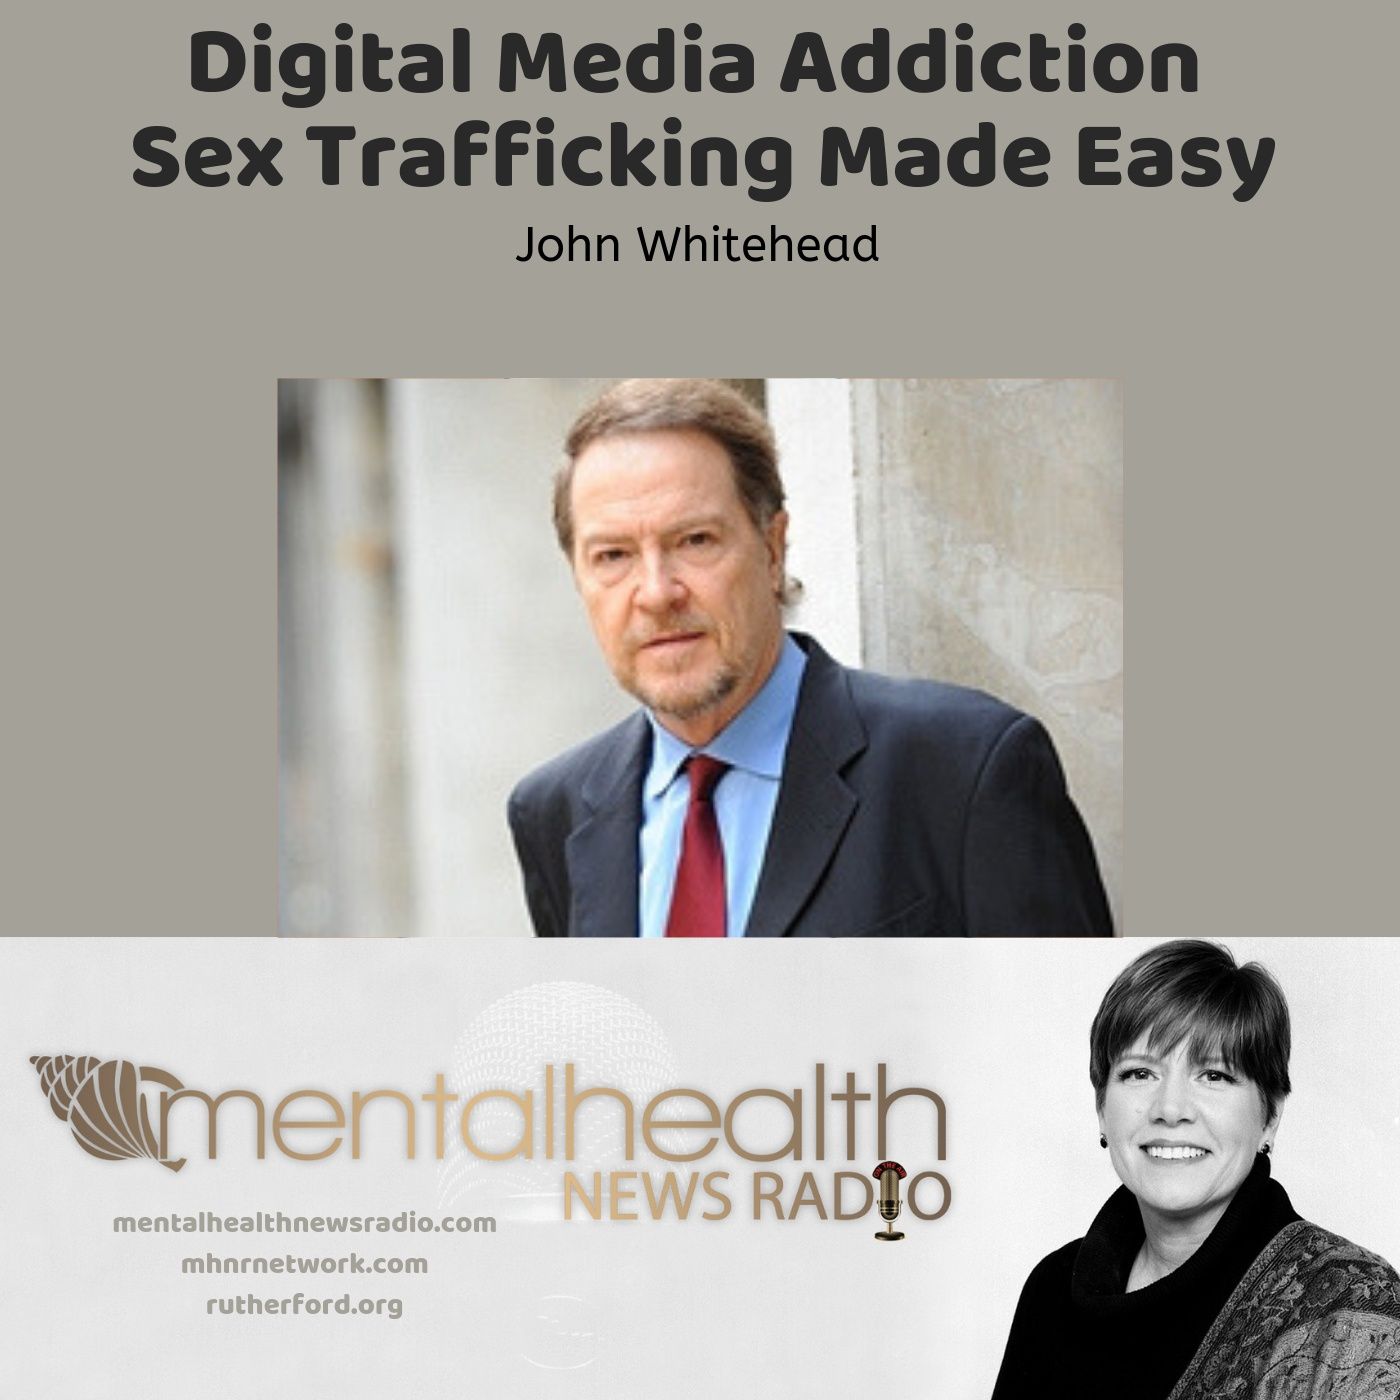 Mental Health News Radio - Digital Media Addiction: Sex Trafficking Made Easy